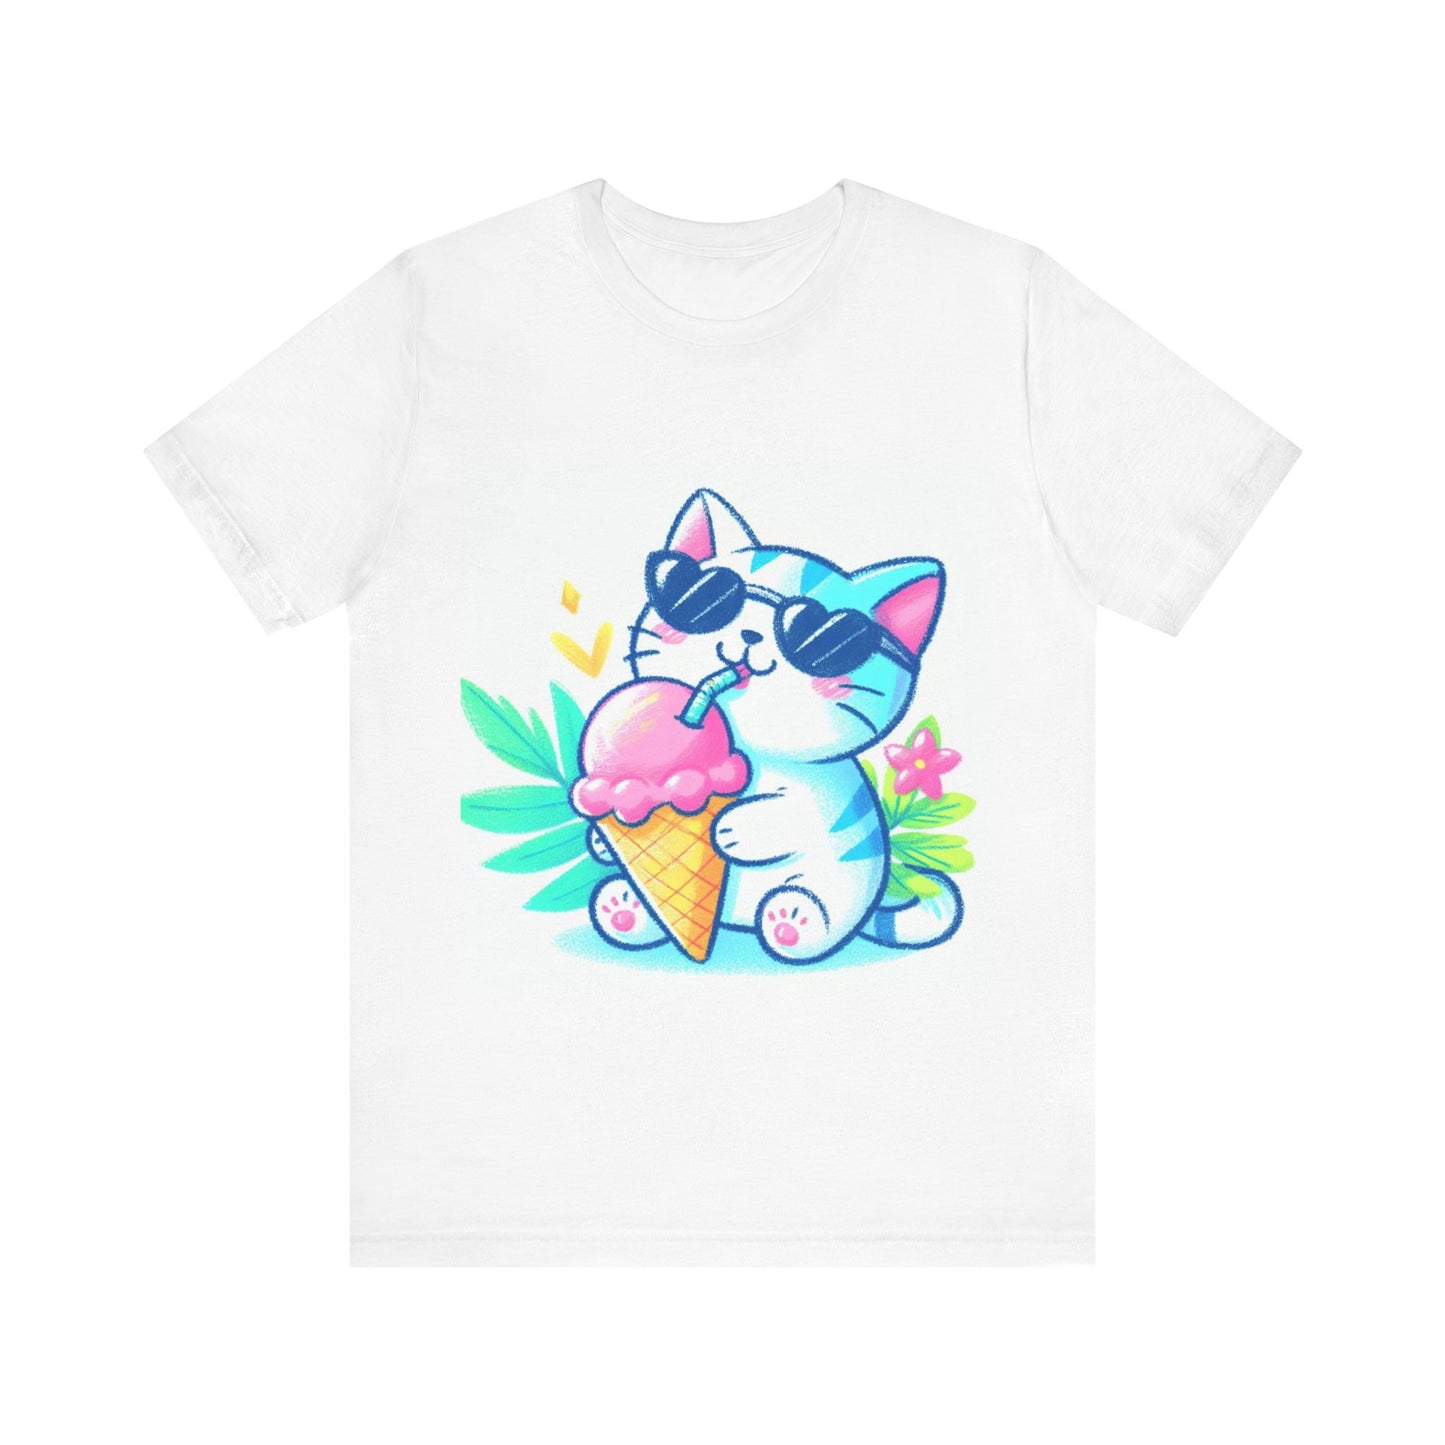 Pastel Tropical Kitty Ice Cream T-Shirt: Unique Hand-Drawn Design